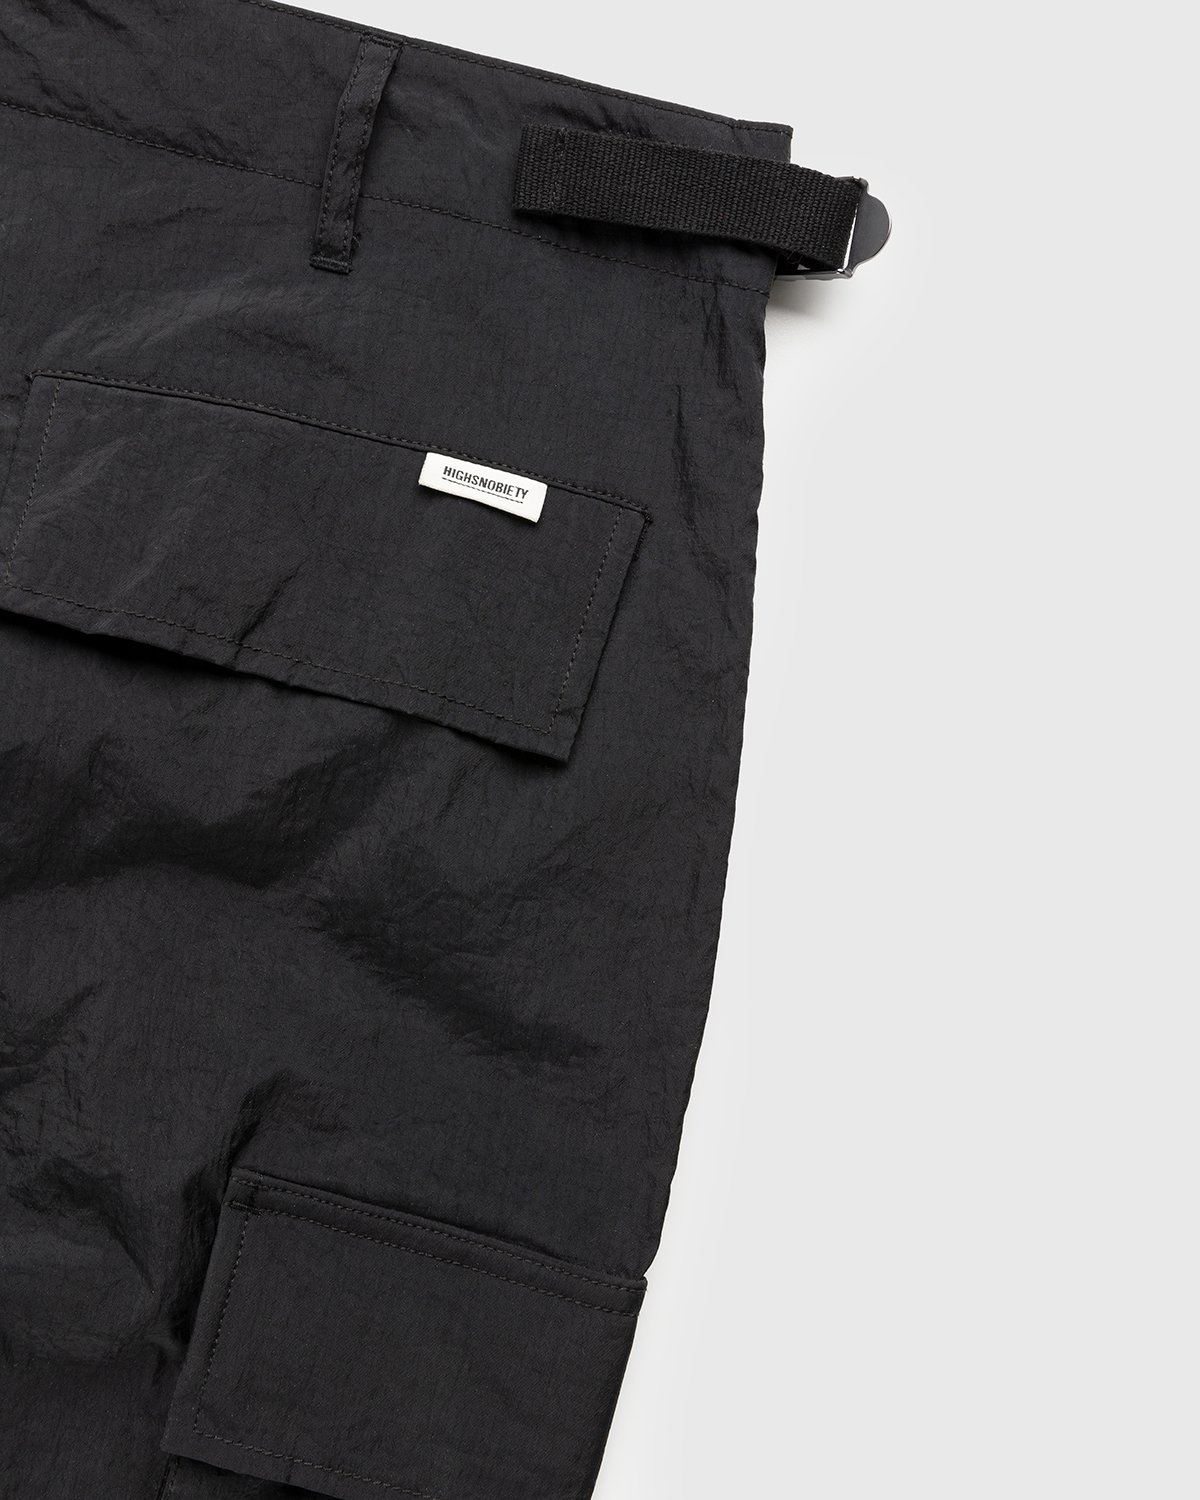 Highsnobiety - Water-Resistant Ripstop Cargo Pants Black - Clothing - Black - Image 3